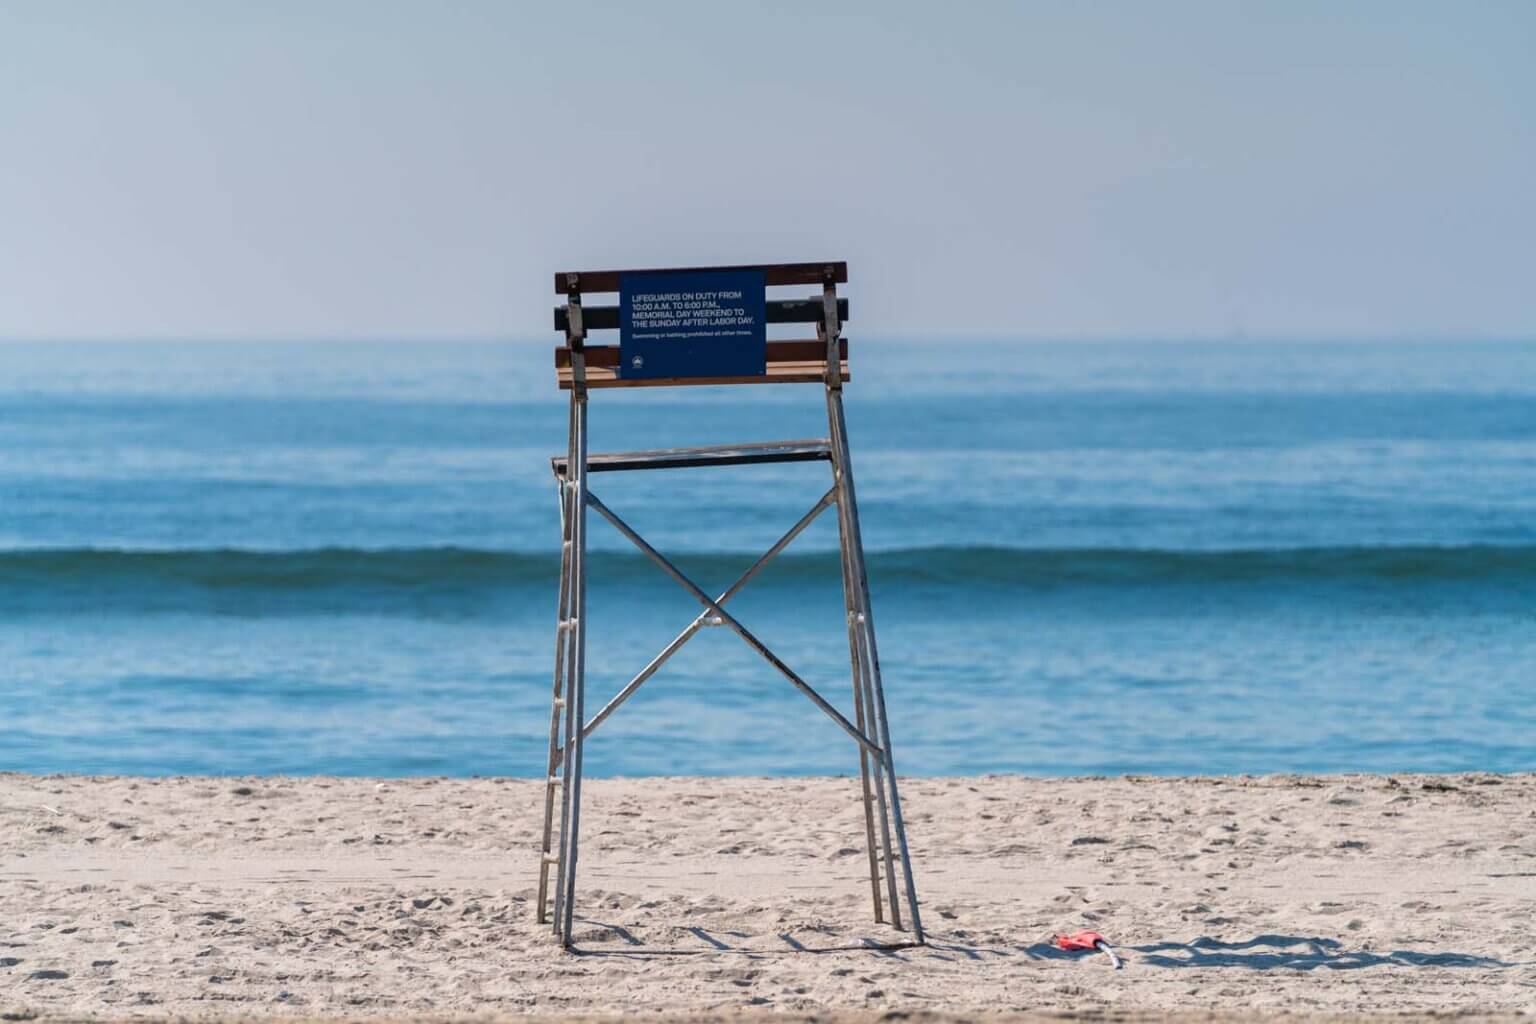 Rockaway Beach lifeguard chair in NYC